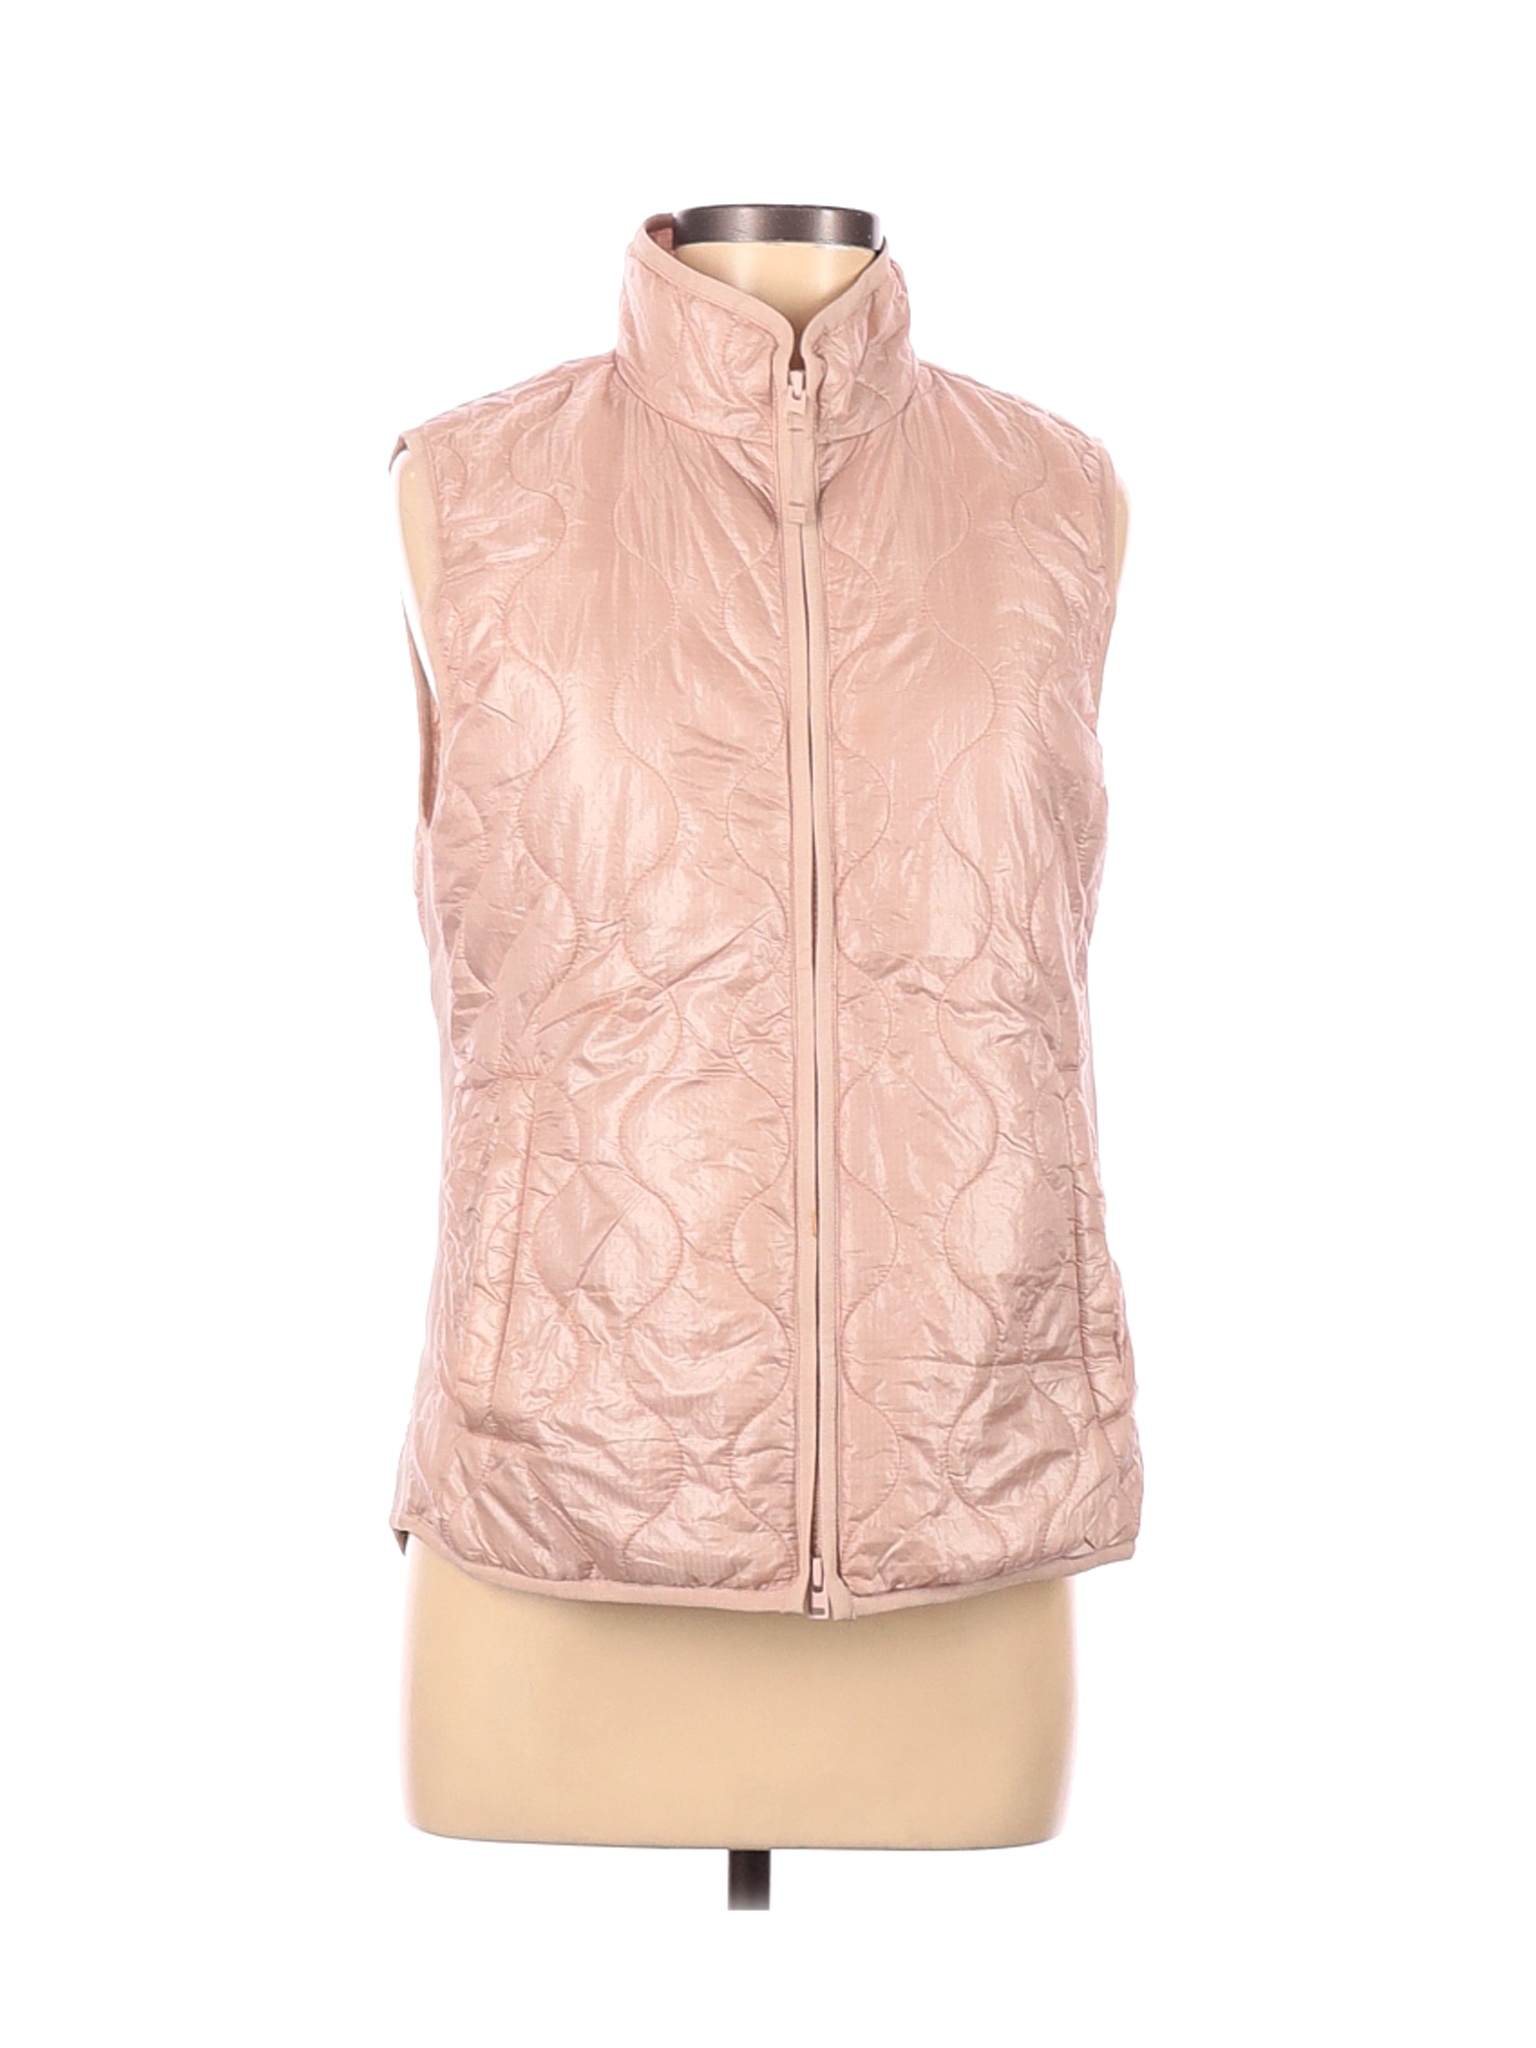 J.Crew Women Pink Vest M | eBay